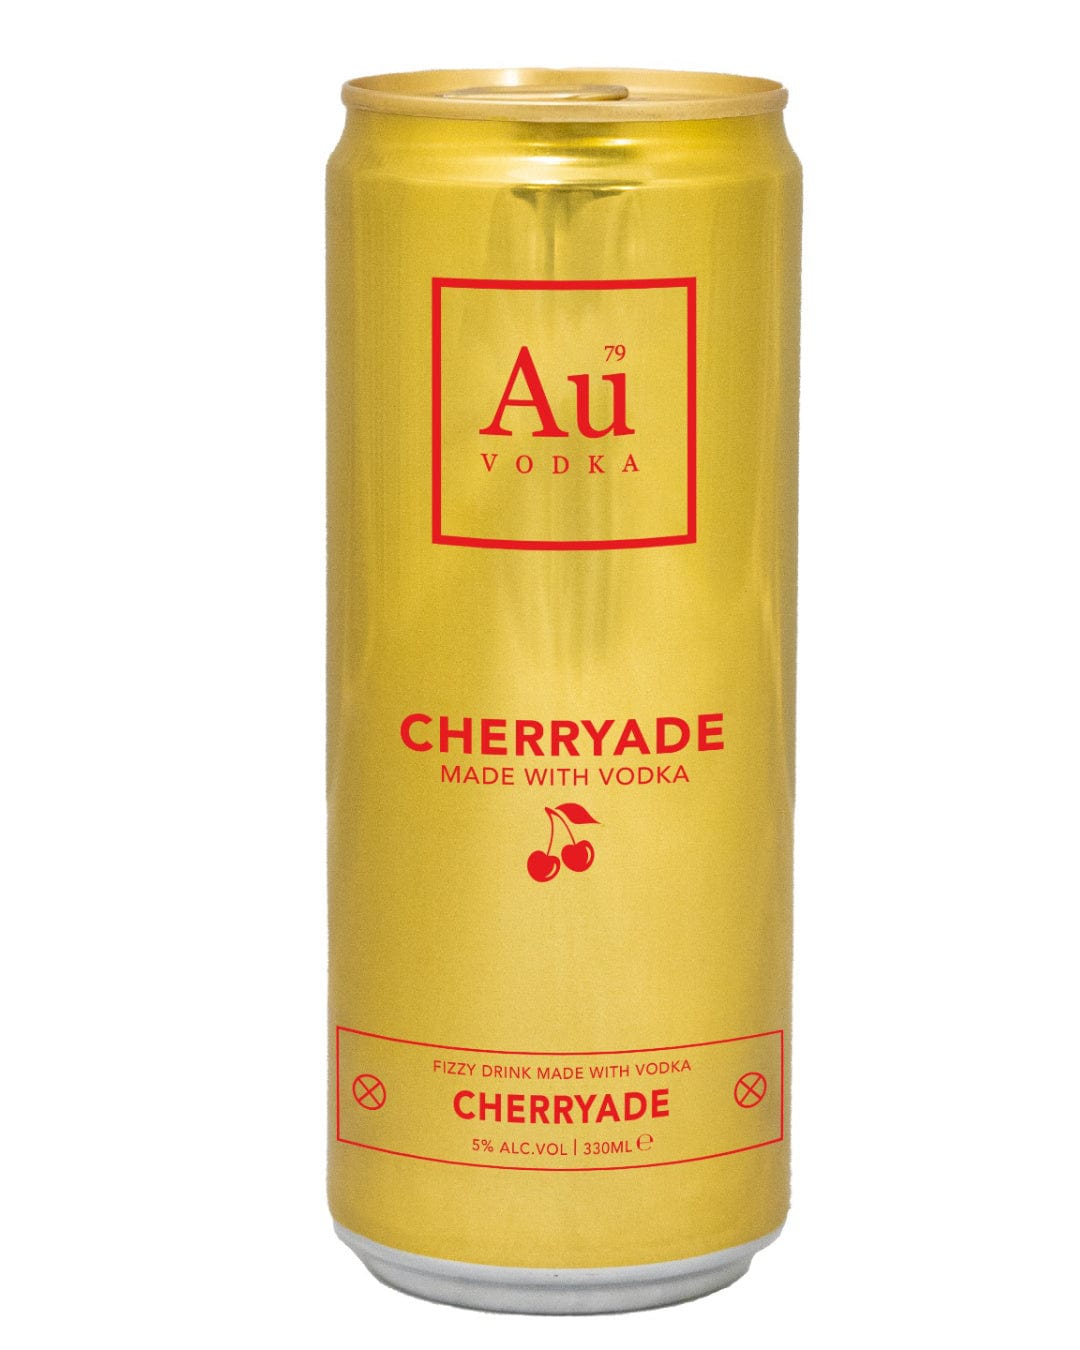 AU Vodka Cherryade Premixed Can Multipack, 12 x 330 ml